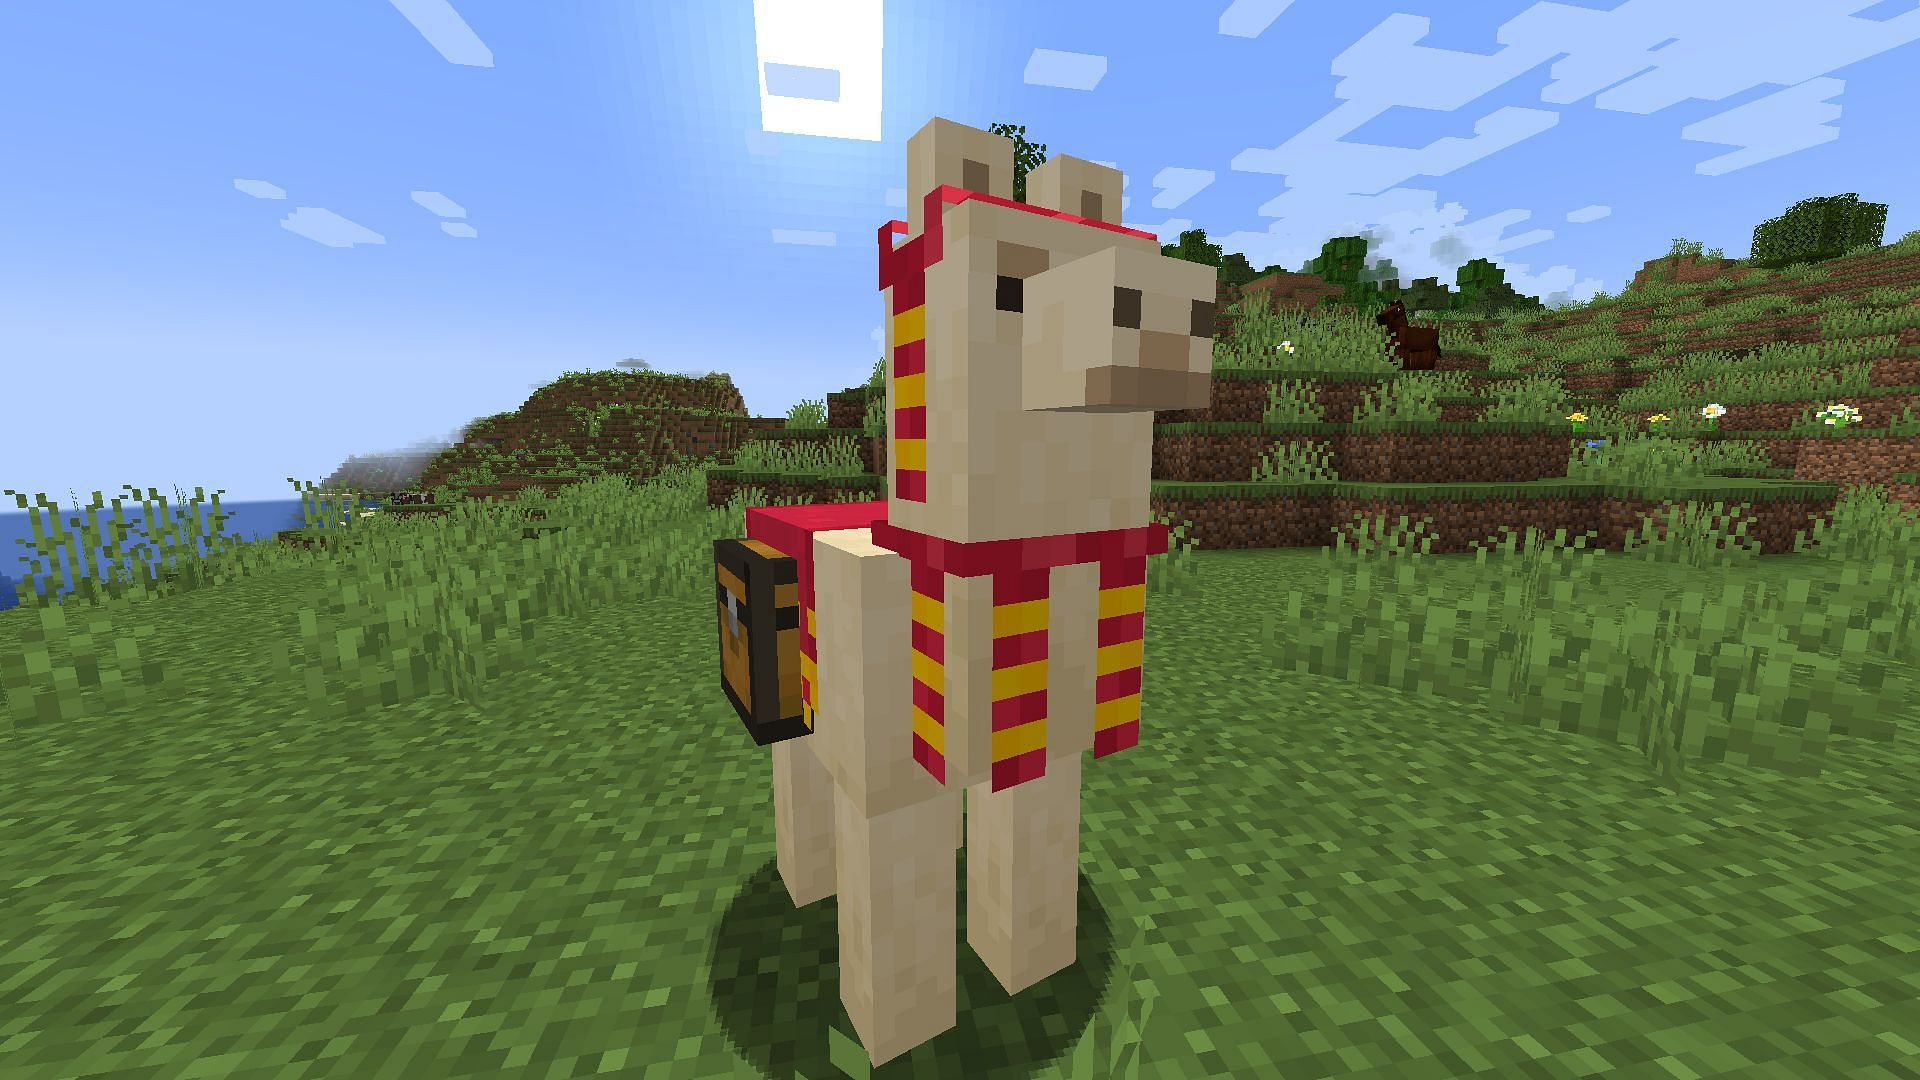 Llama consume hay bales to enter breeding mode in Minecraft (Image via Mojang)